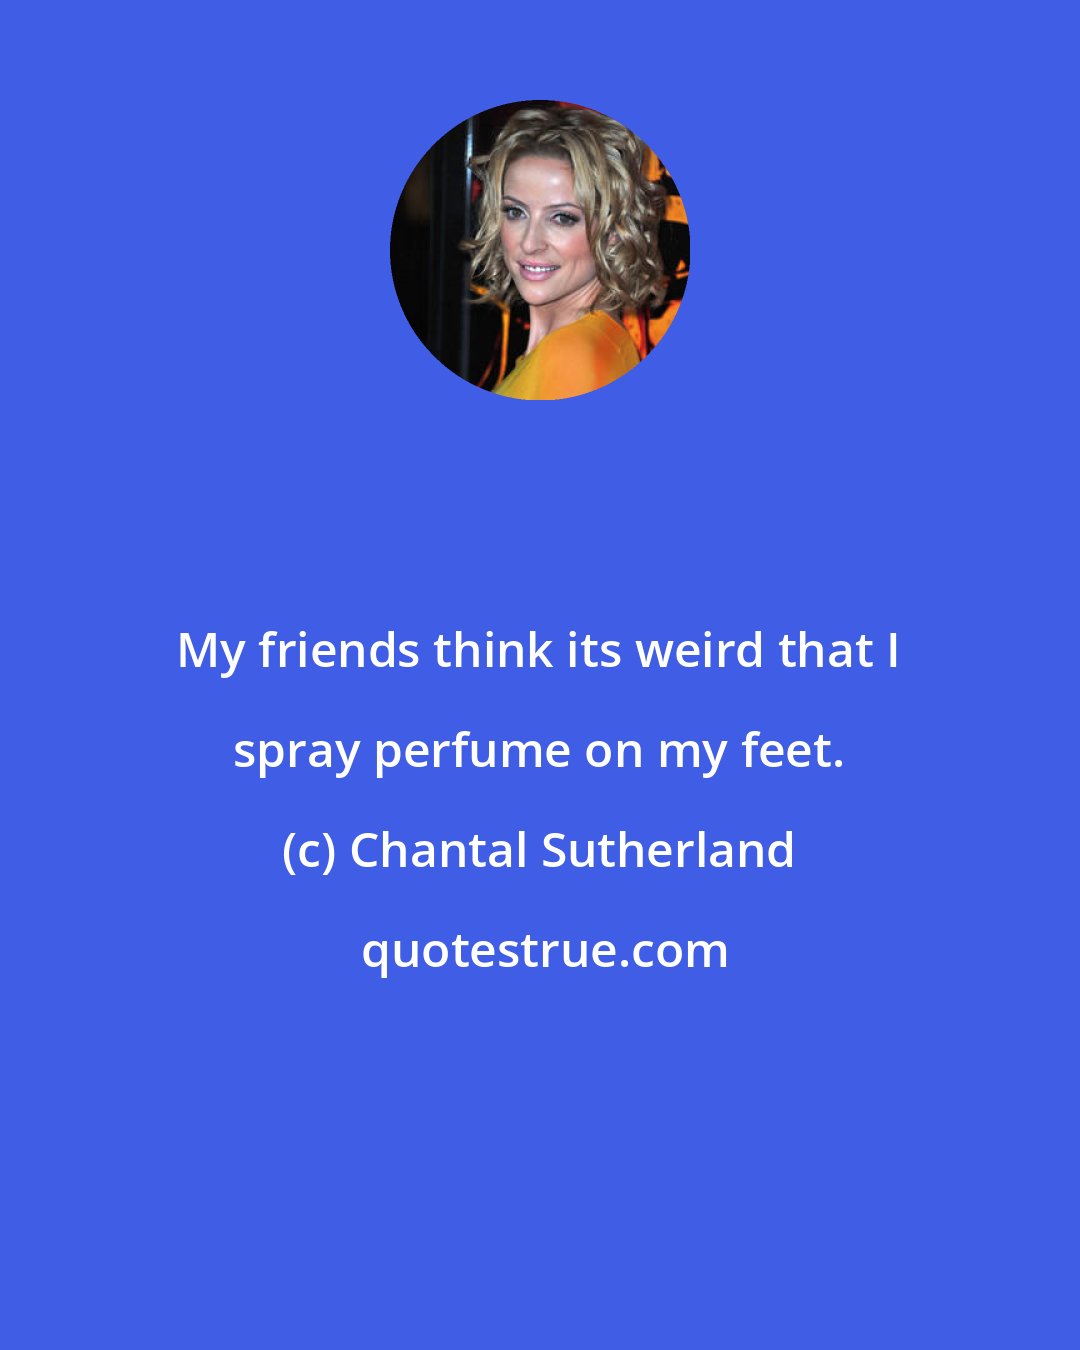 Chantal Sutherland: My friends think its weird that I spray perfume on my feet.